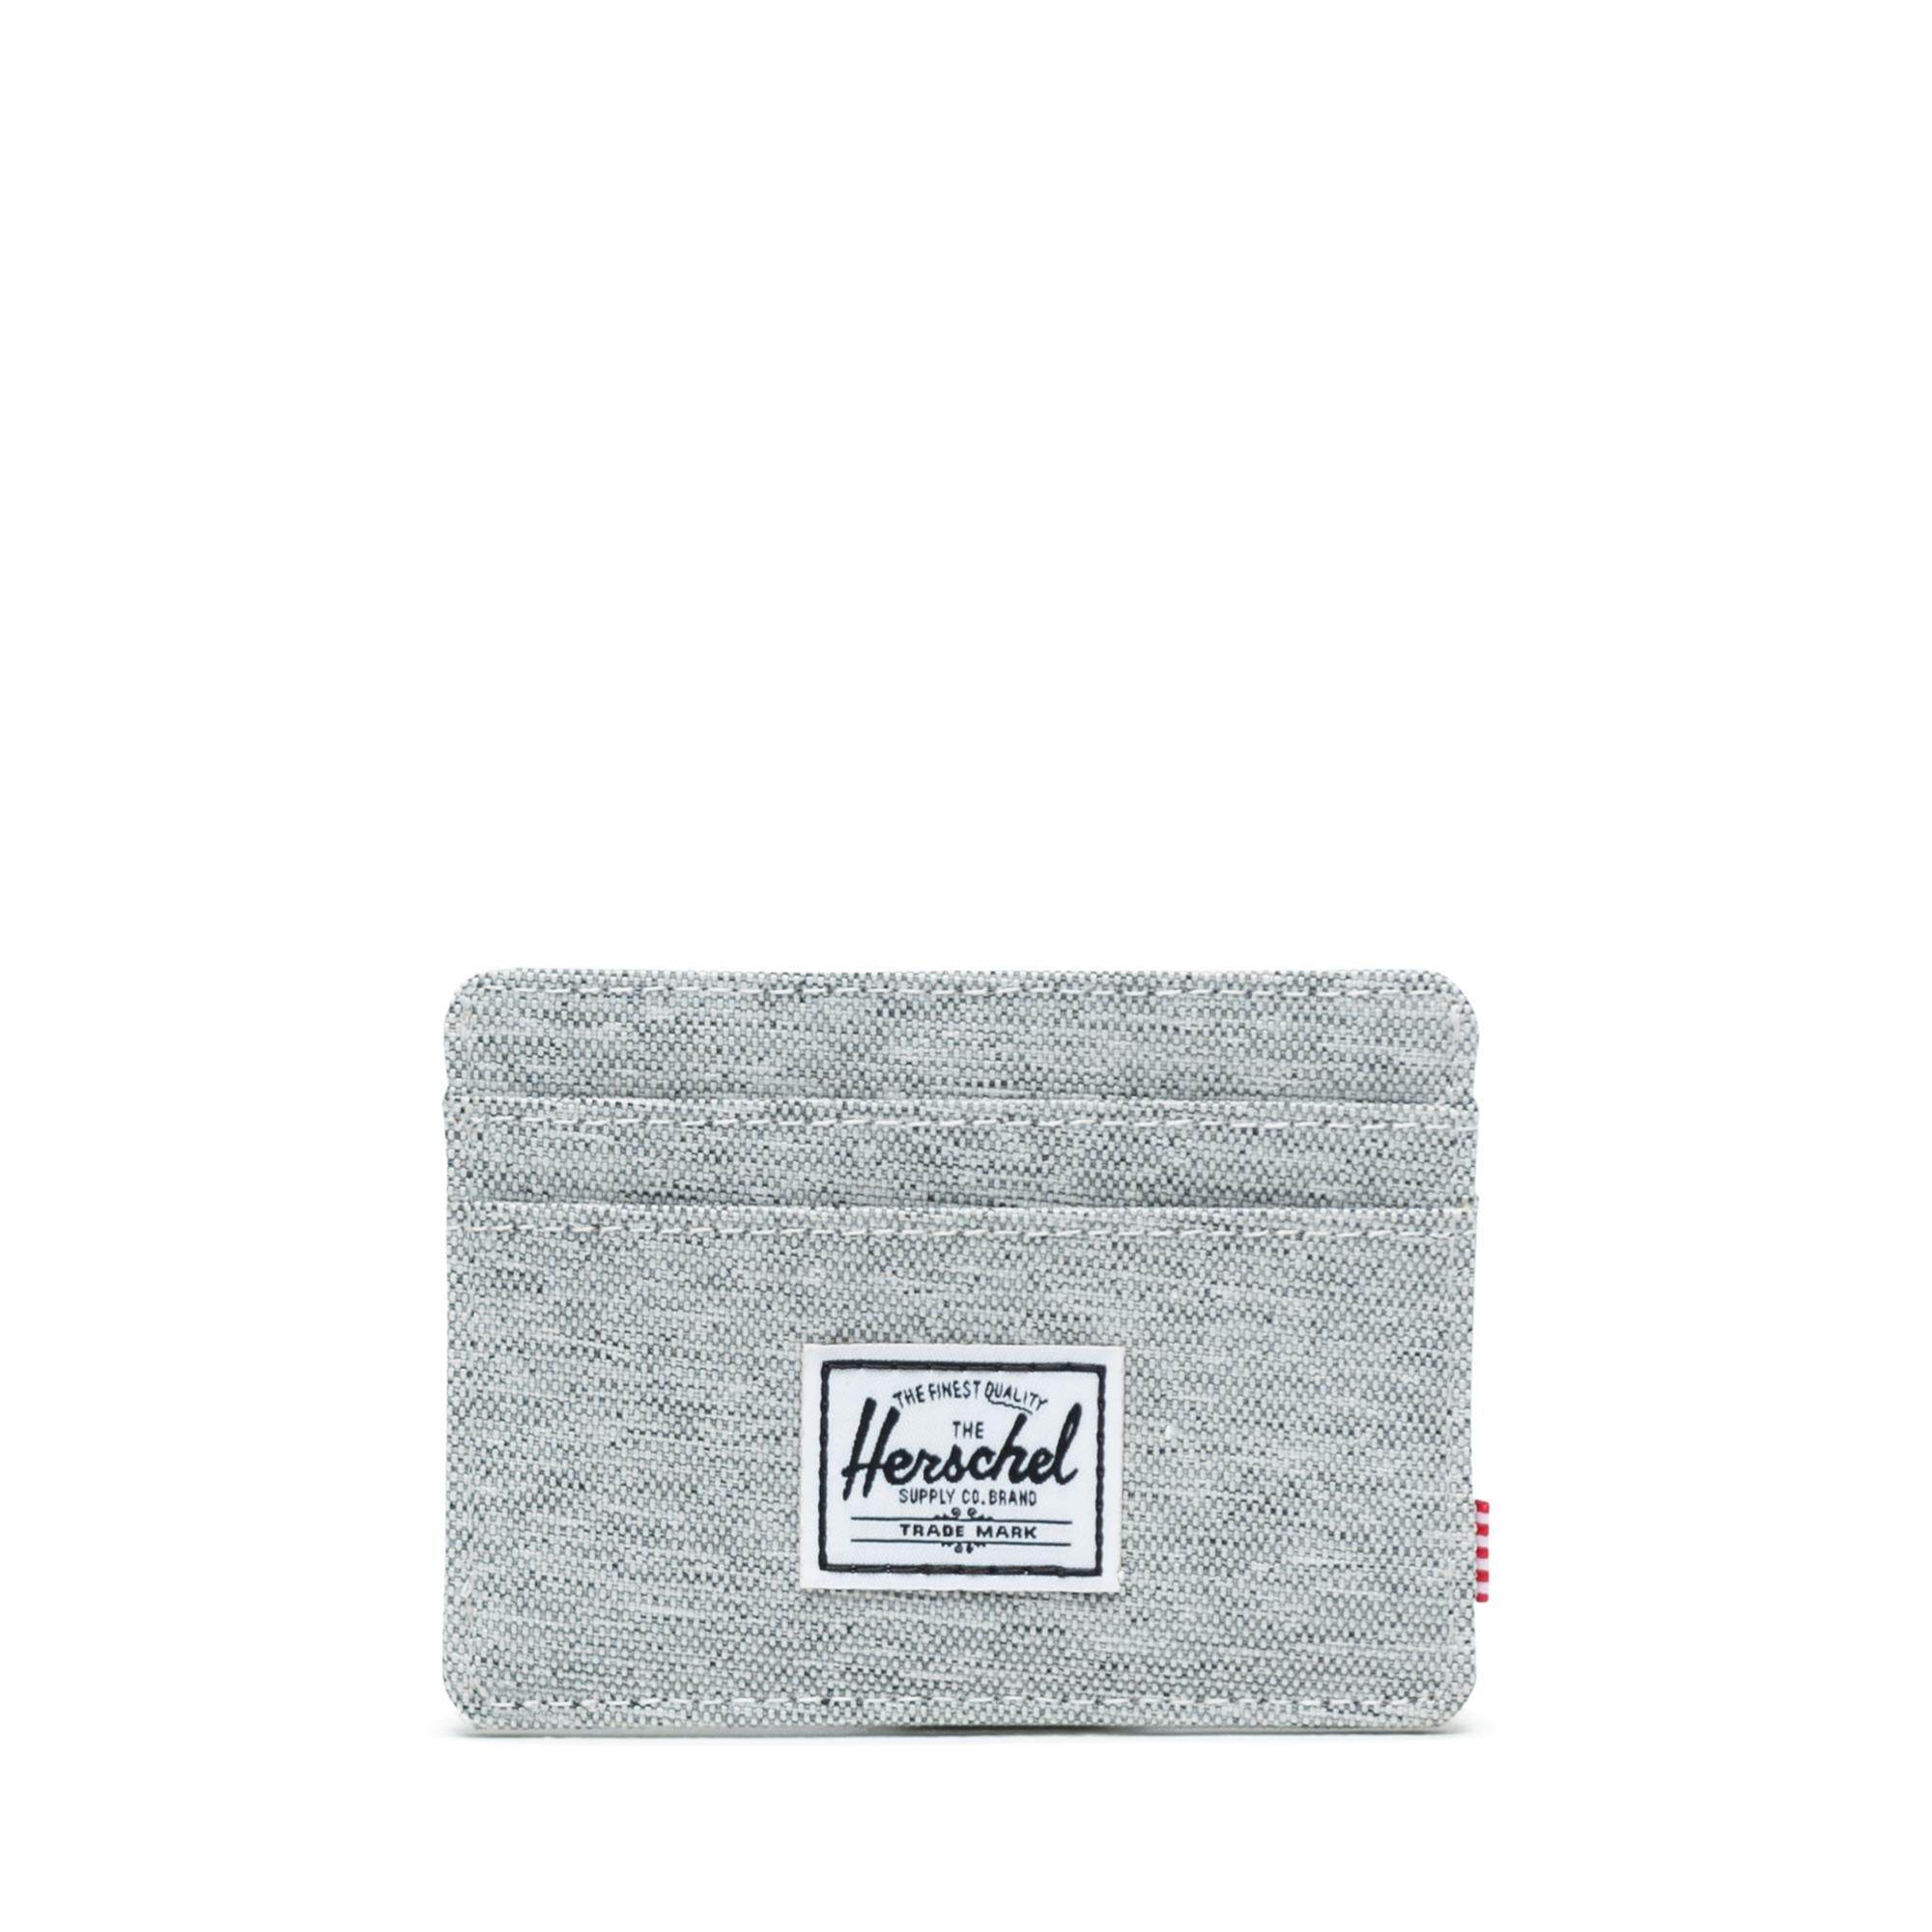 Herschel Supply กระเป๋าใส่นามบัตร รุ่น Charlie RFID (Clearance)